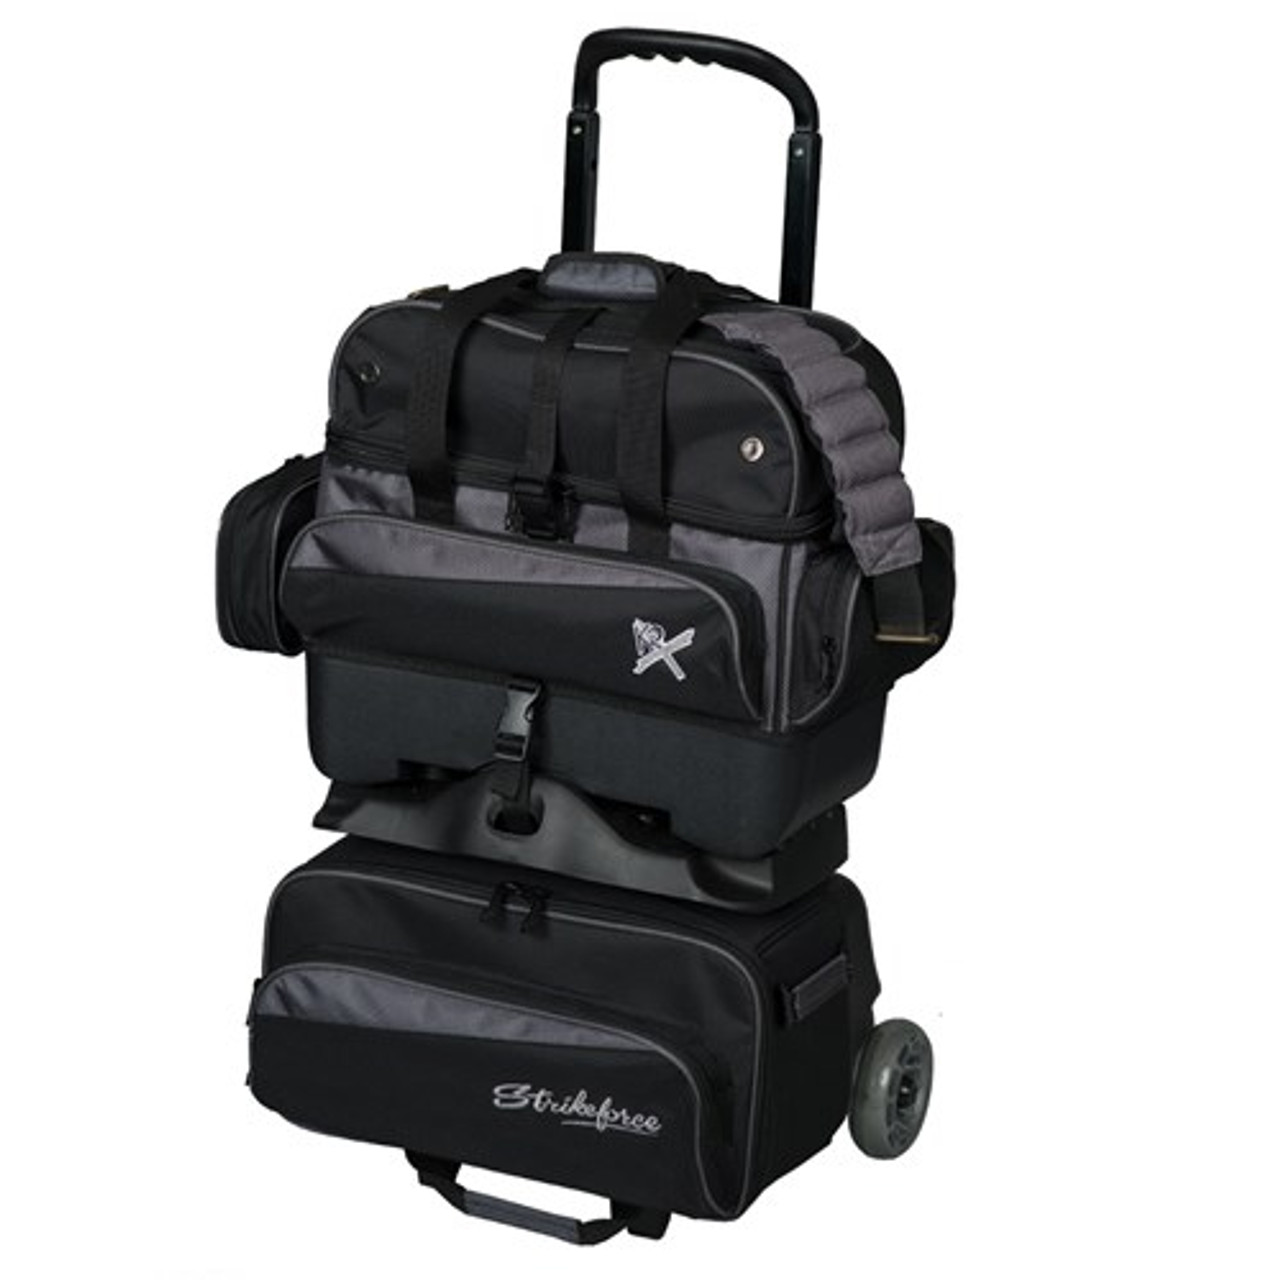 KR Hybrid X 4 Ball Roller Bowling Bag